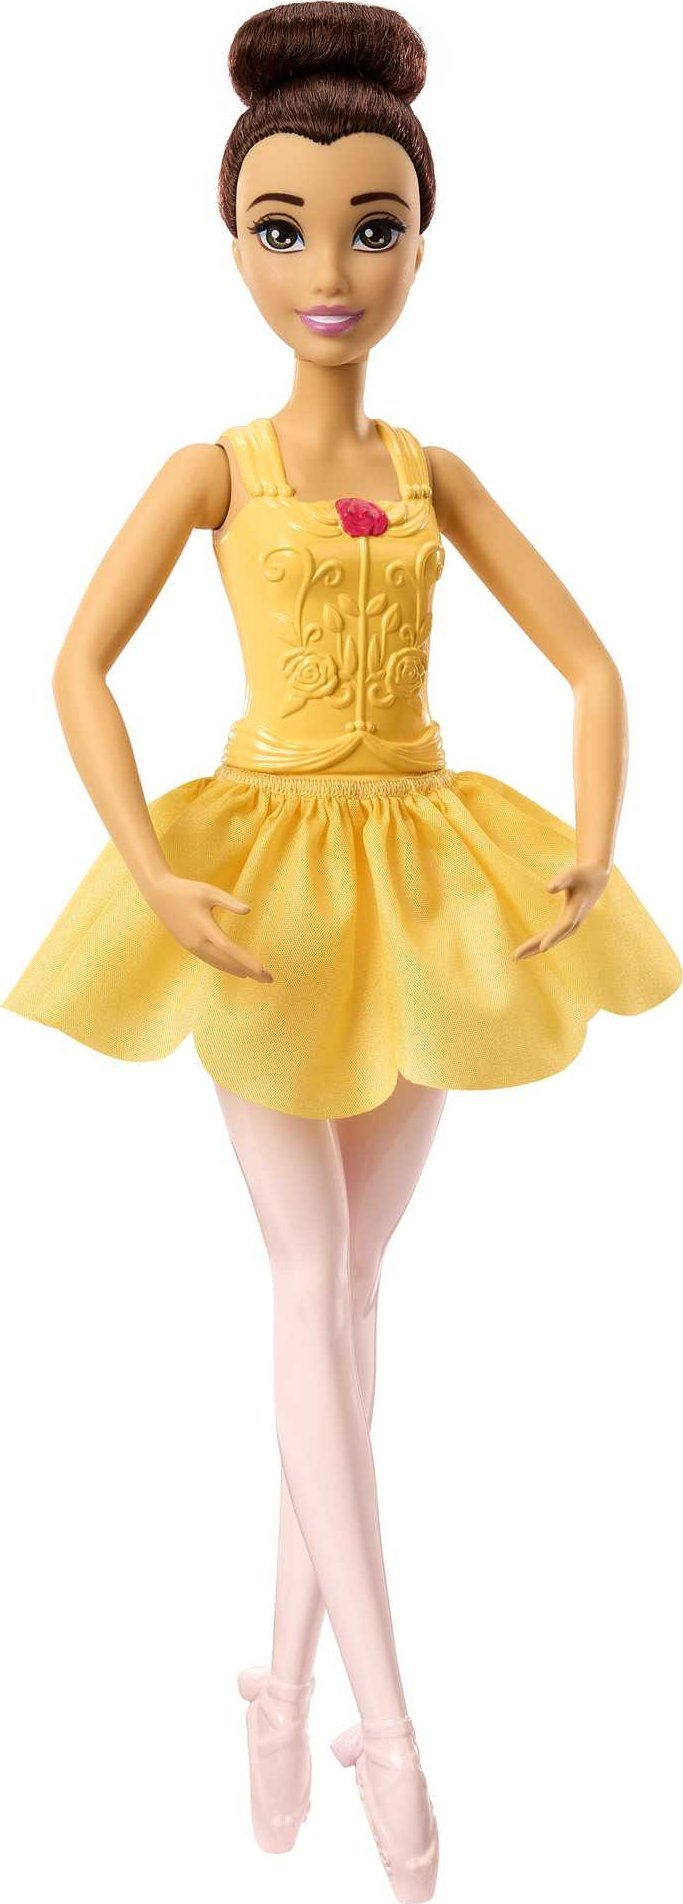 Mattel Ksiezniczka Disneya Lalka Bella Baletnica GXP-859542 (194735120208) bērnu rotaļlieta